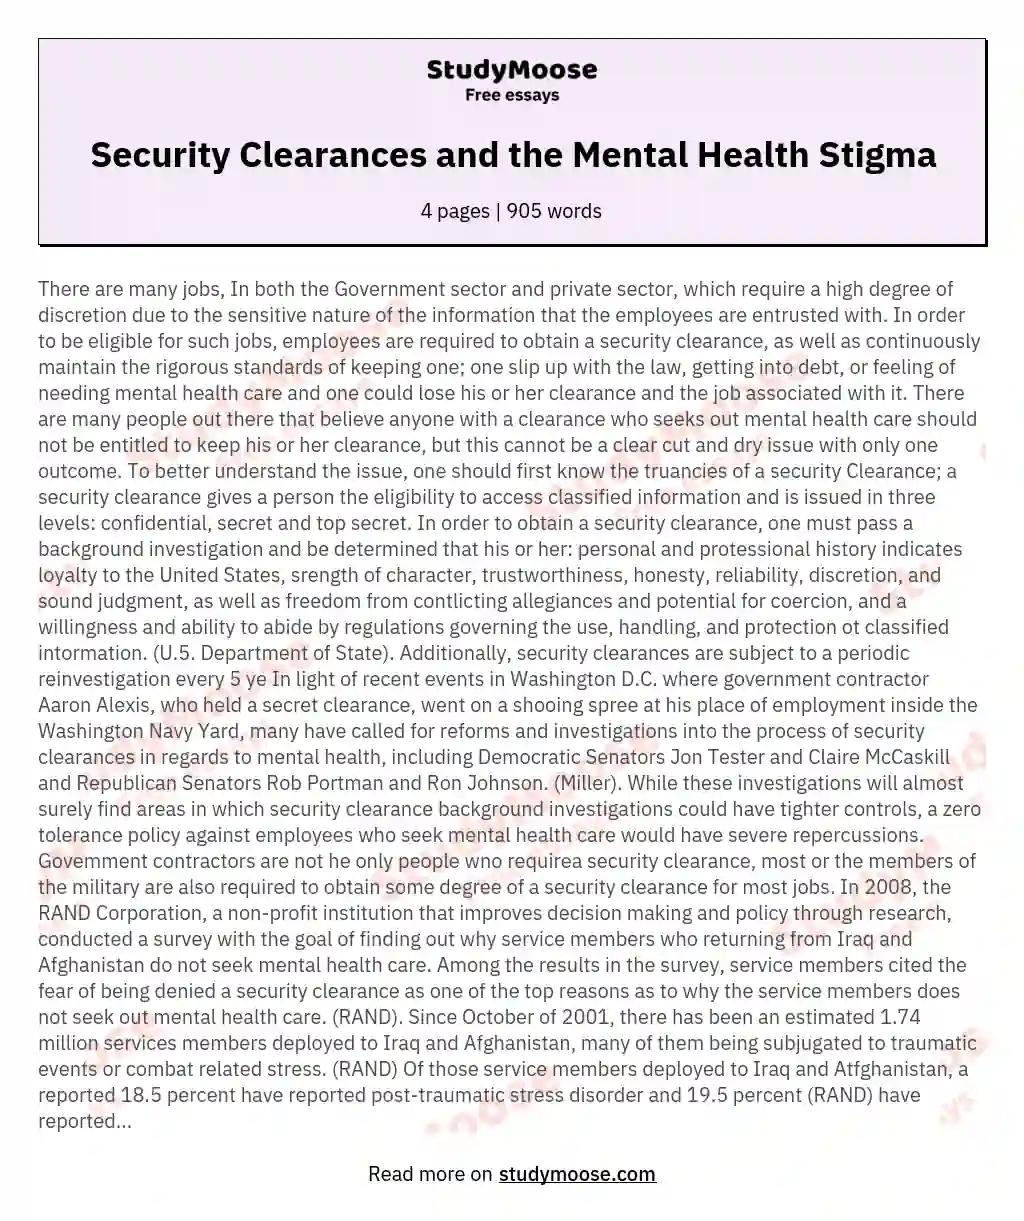 Security Clearances and the Mental Health Stigma essay